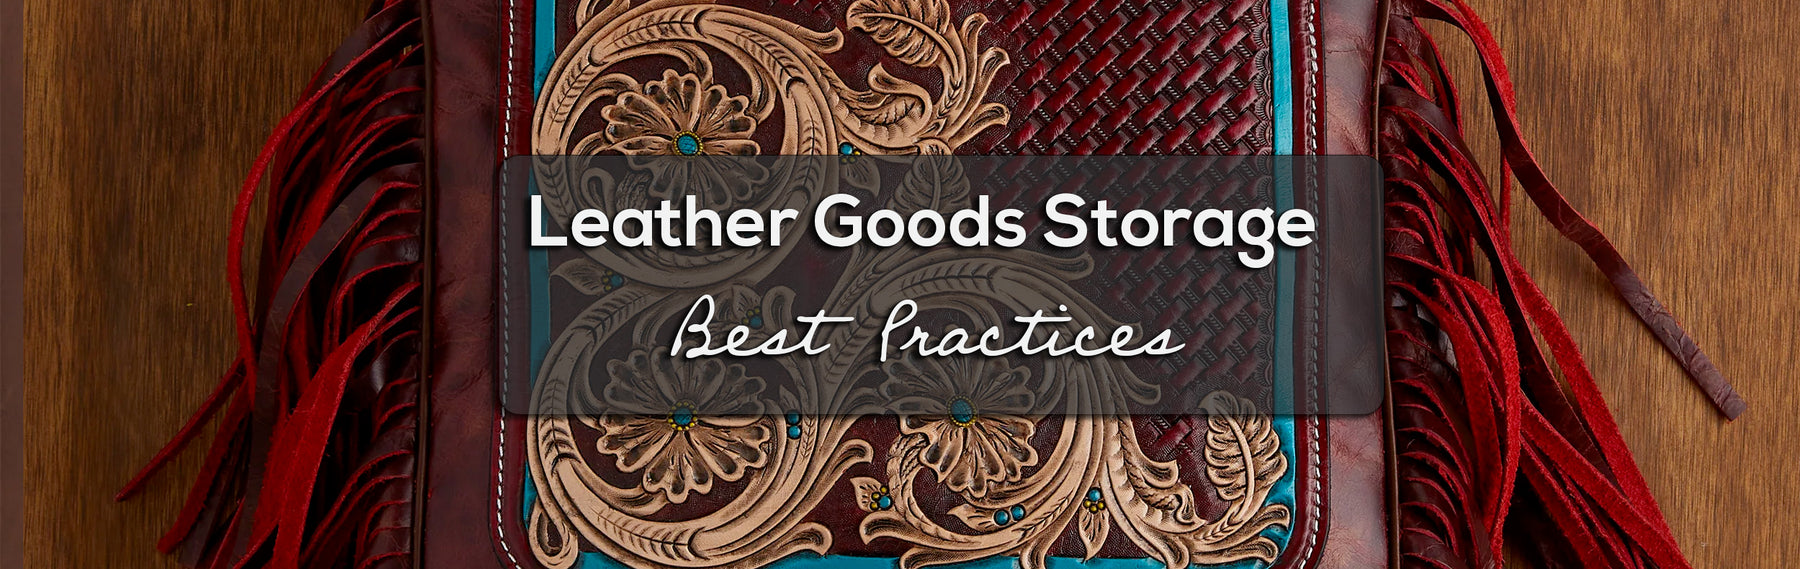 Leather goods storage- best practices!